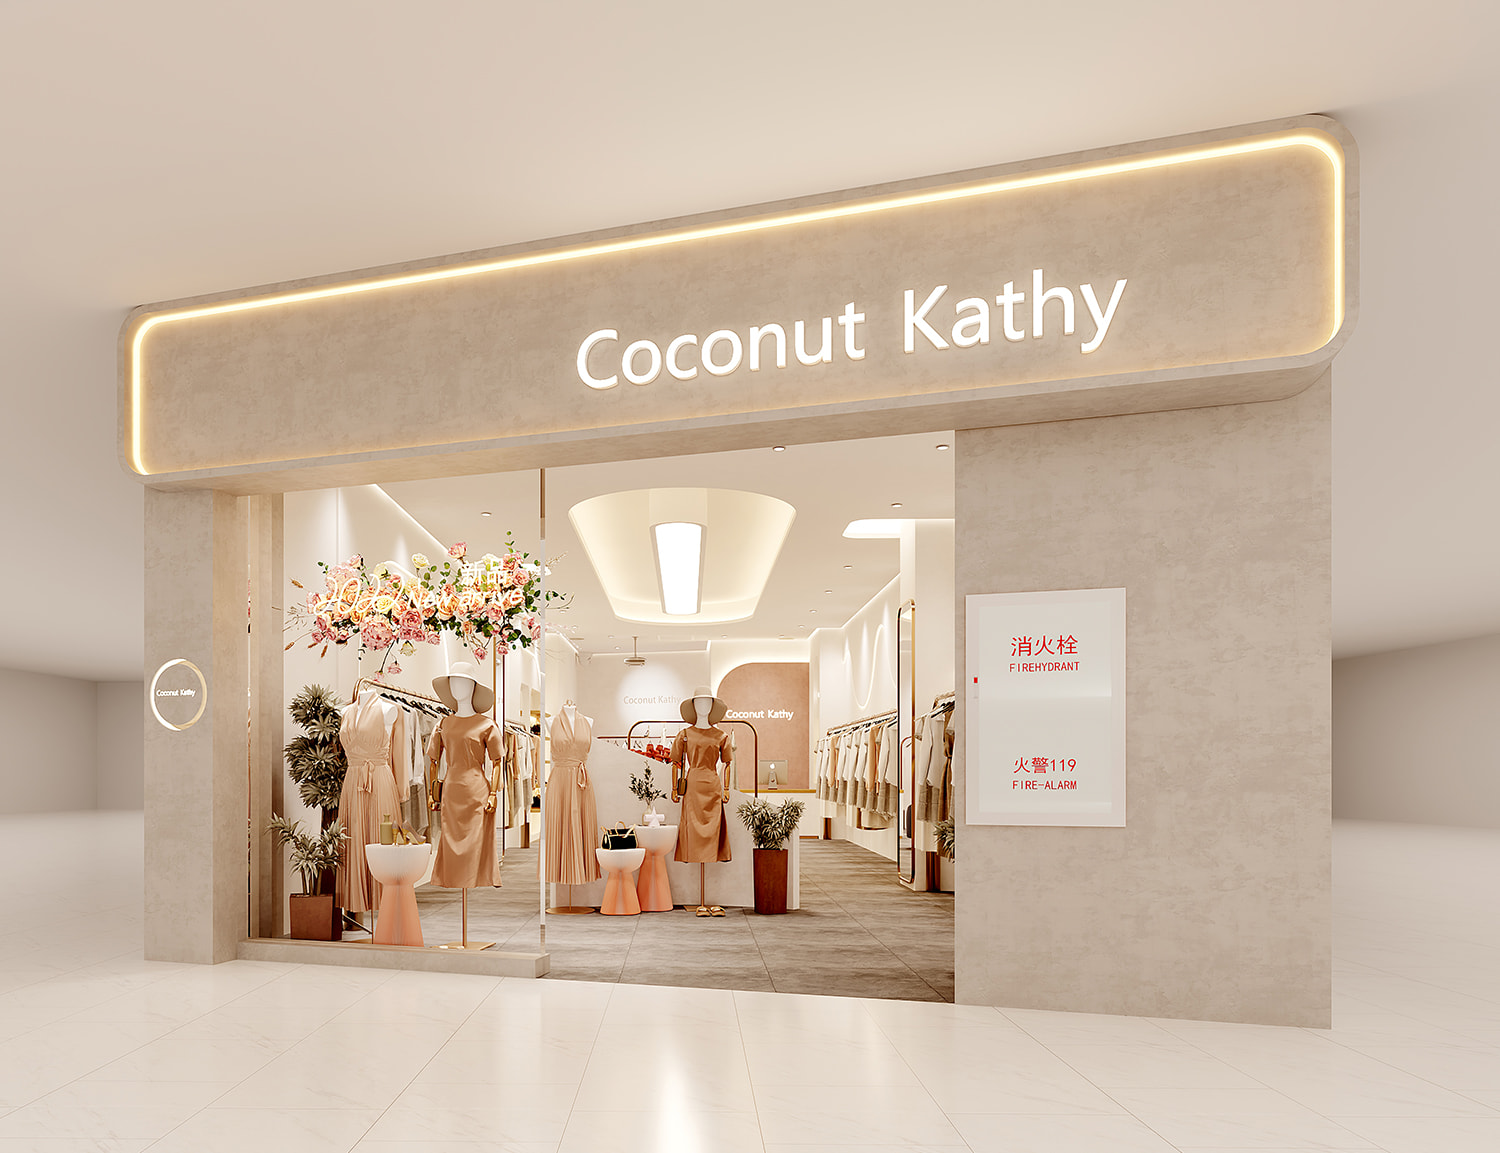 Coconut Kathy 潮流女装店